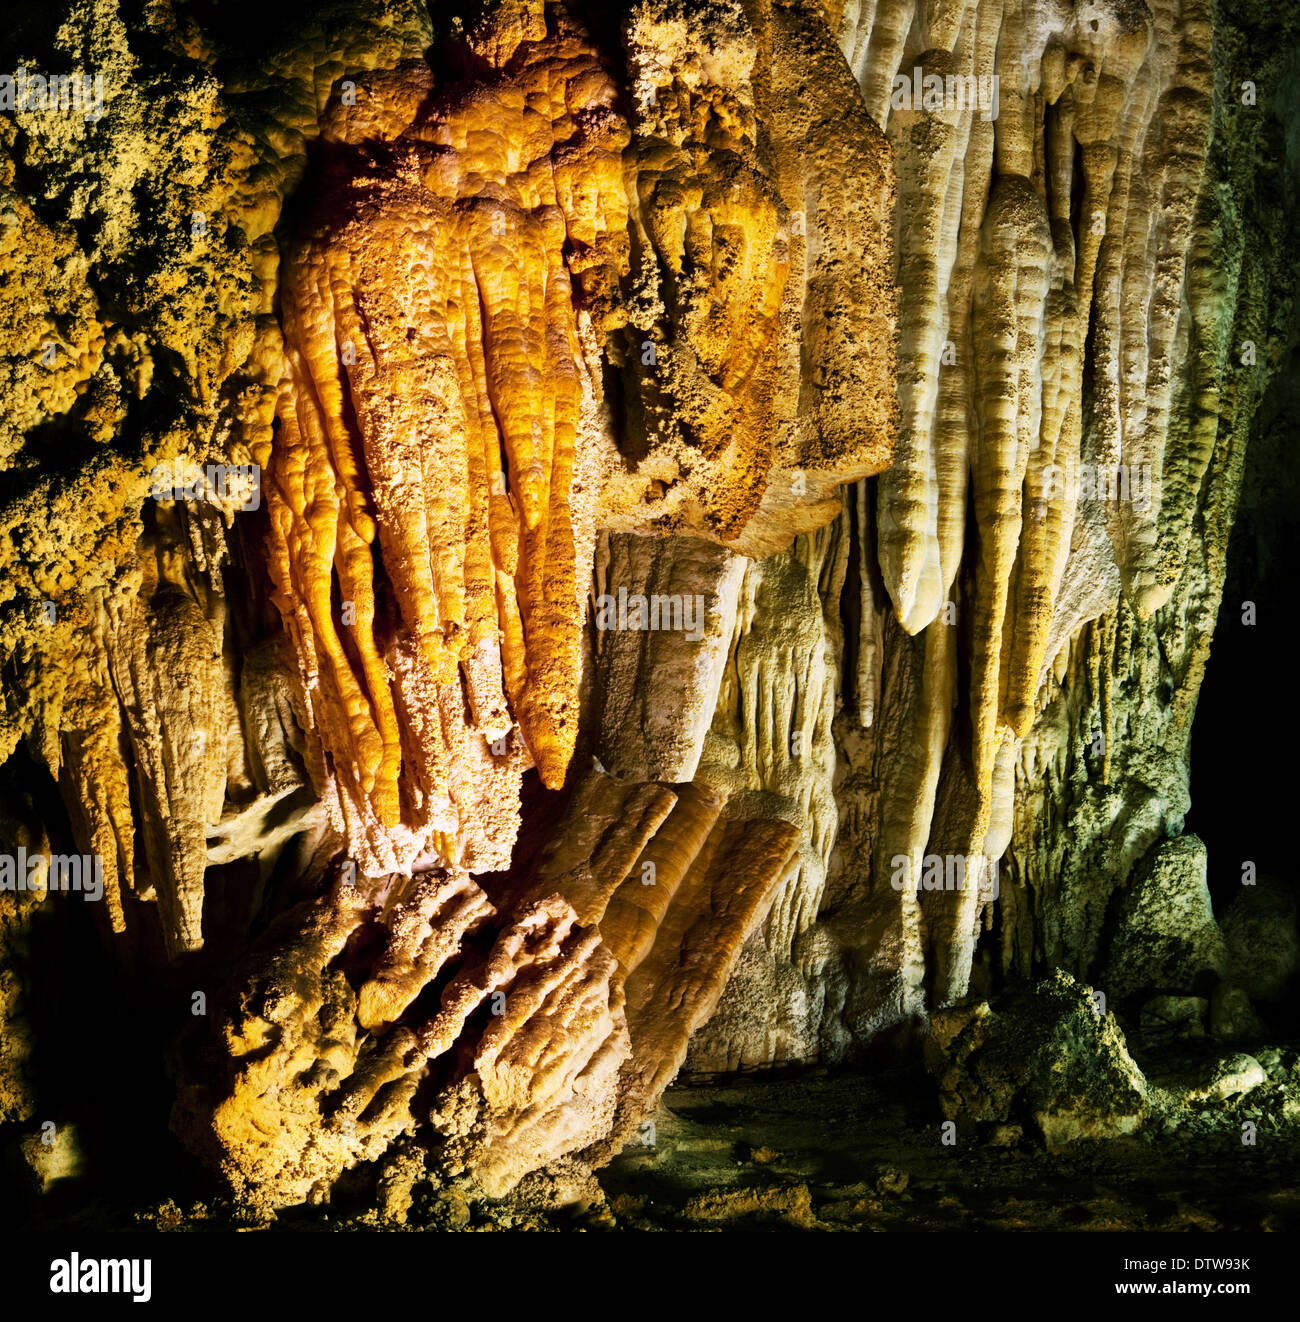 Grotta Foto Stock